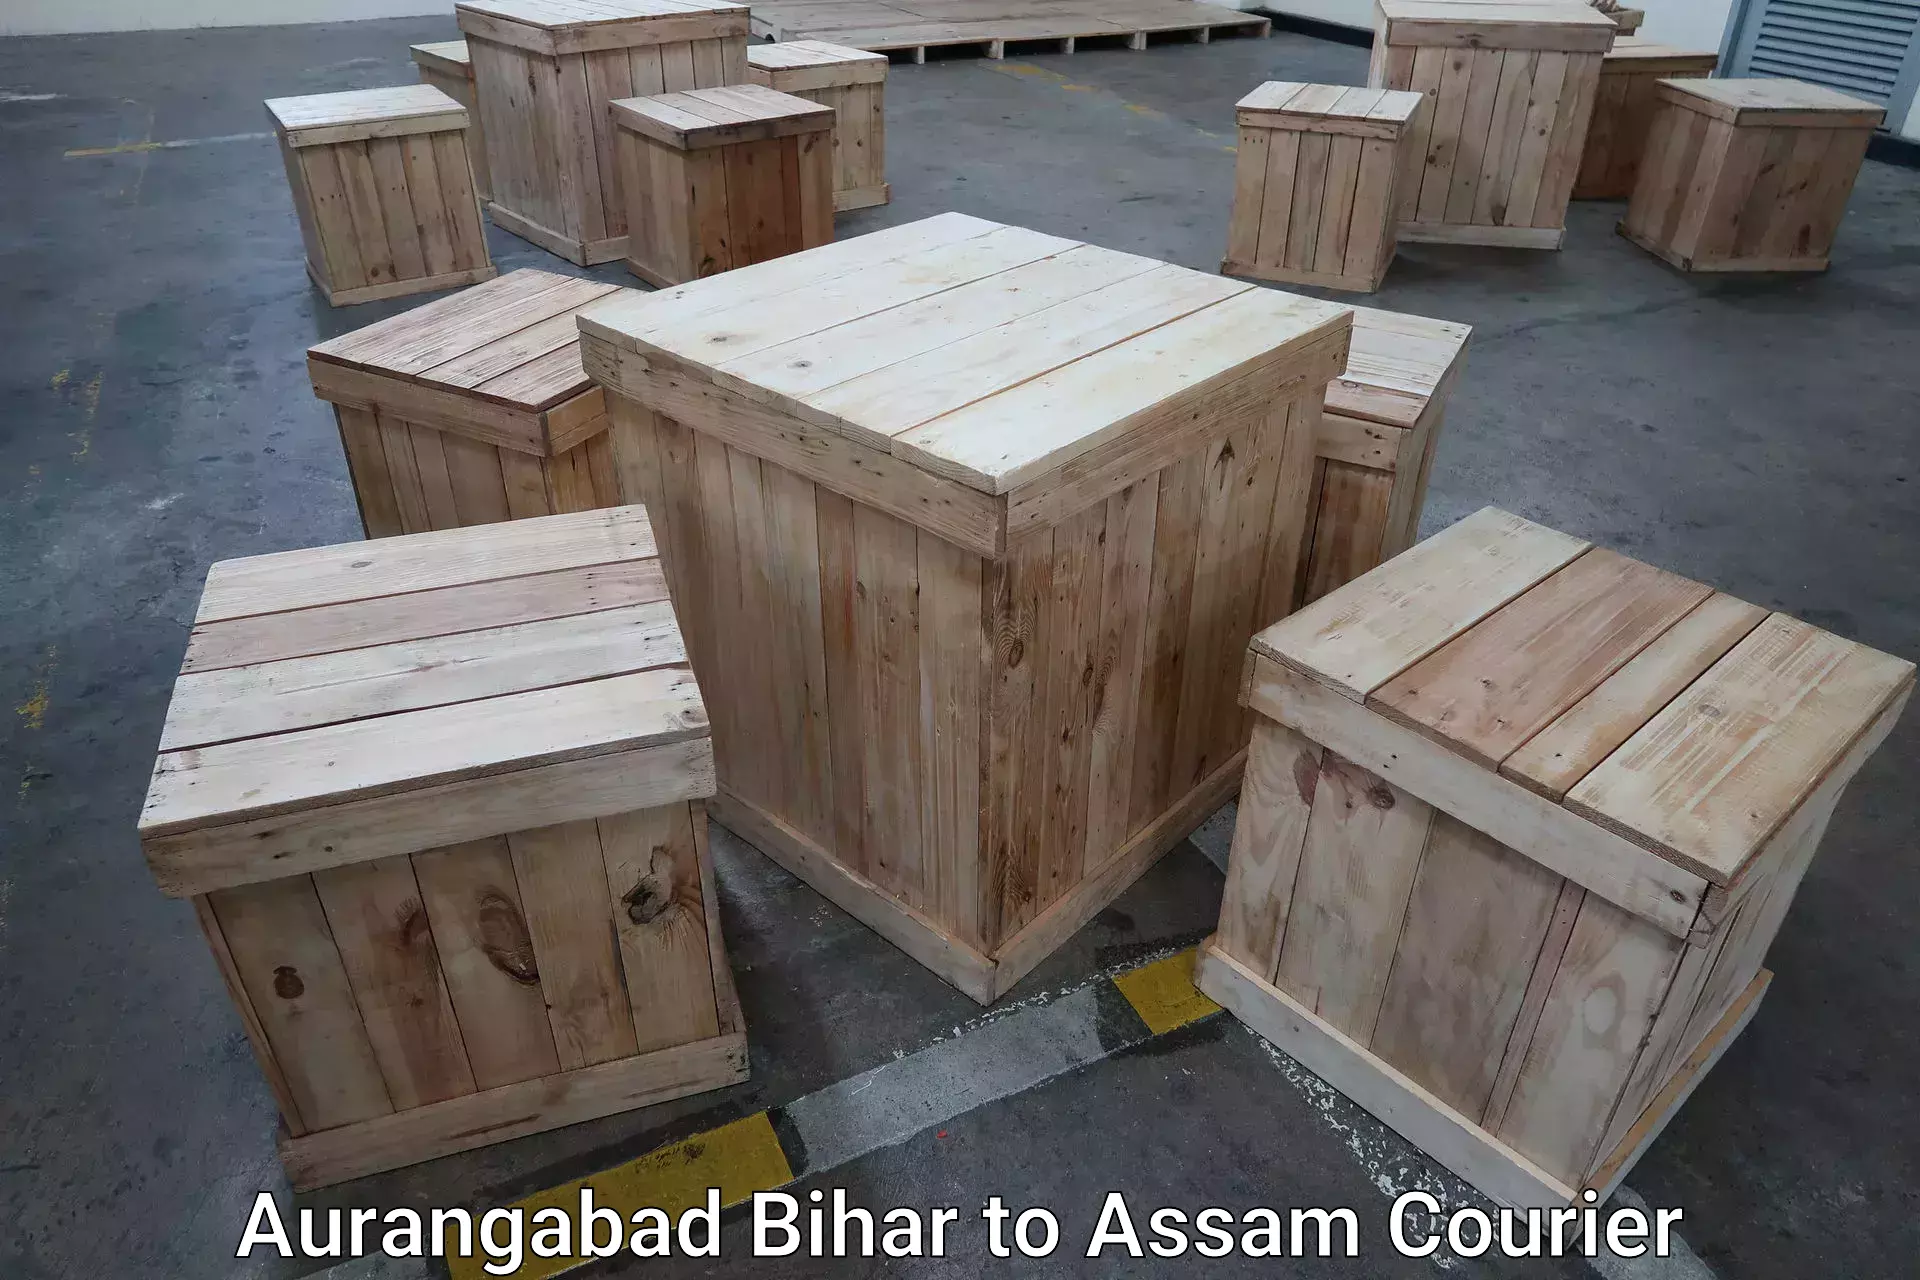 Luggage shipment processing Aurangabad Bihar to Rangia